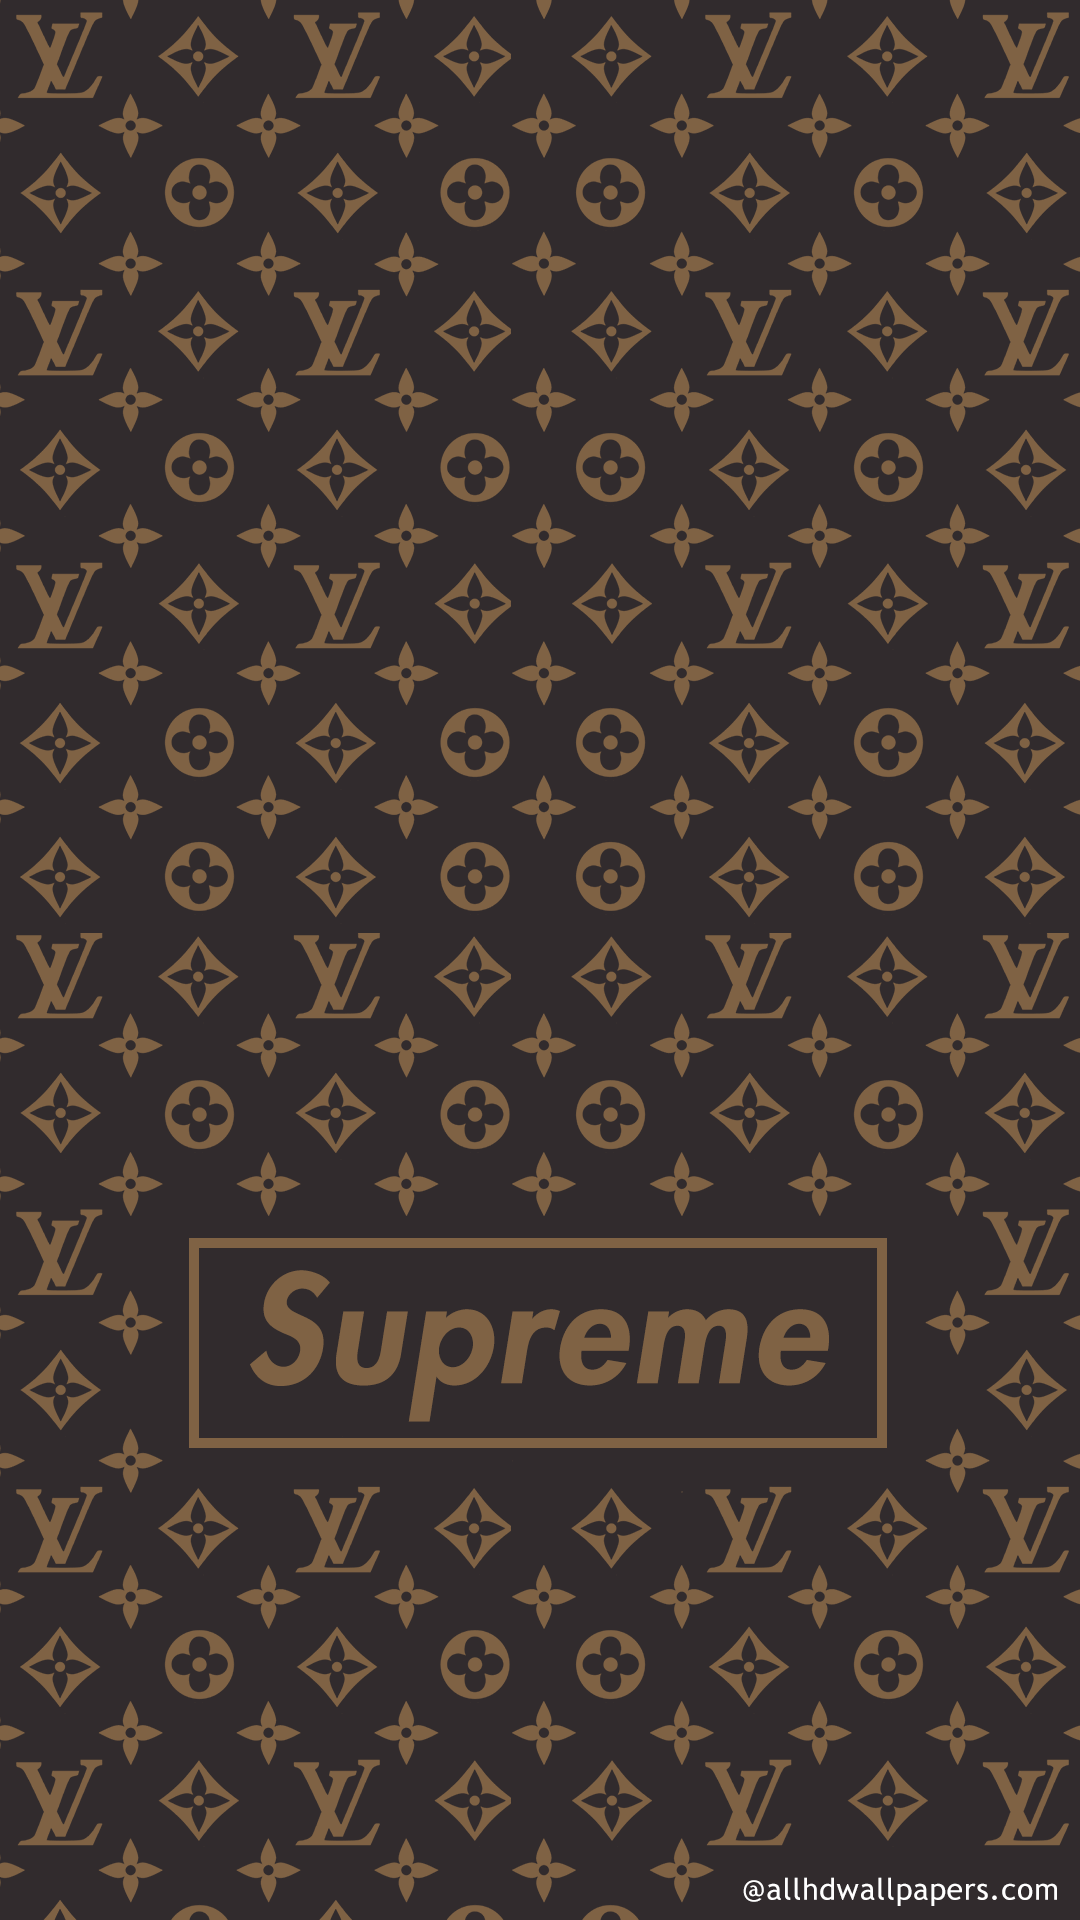 Supreme Wallpaper in 4K. Supreme wallpaper, Supreme iphone wallpaper, Gucci wallpaper iphone